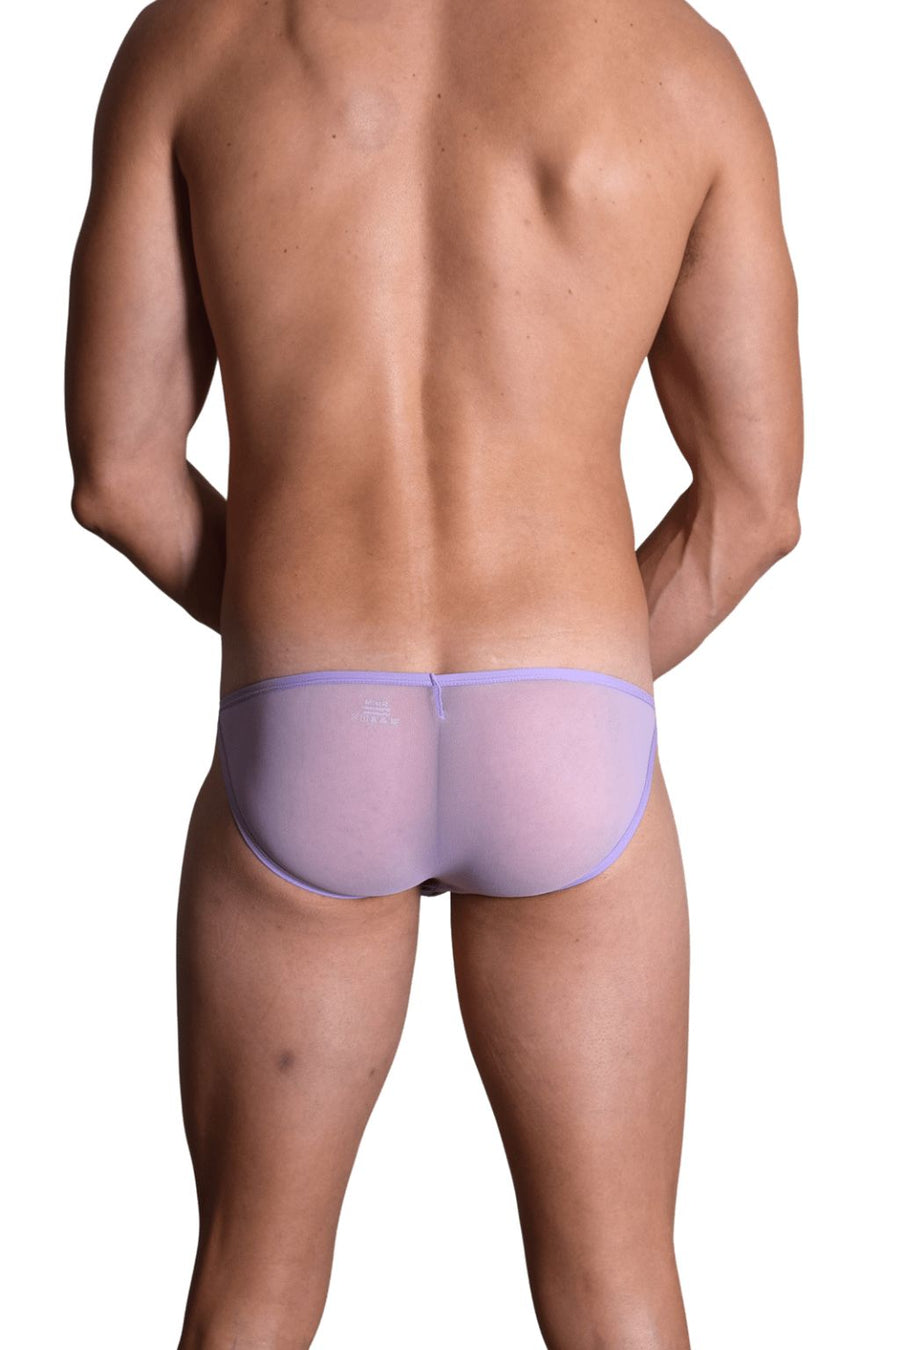 N2N Sheer Bikini purple Briefs 